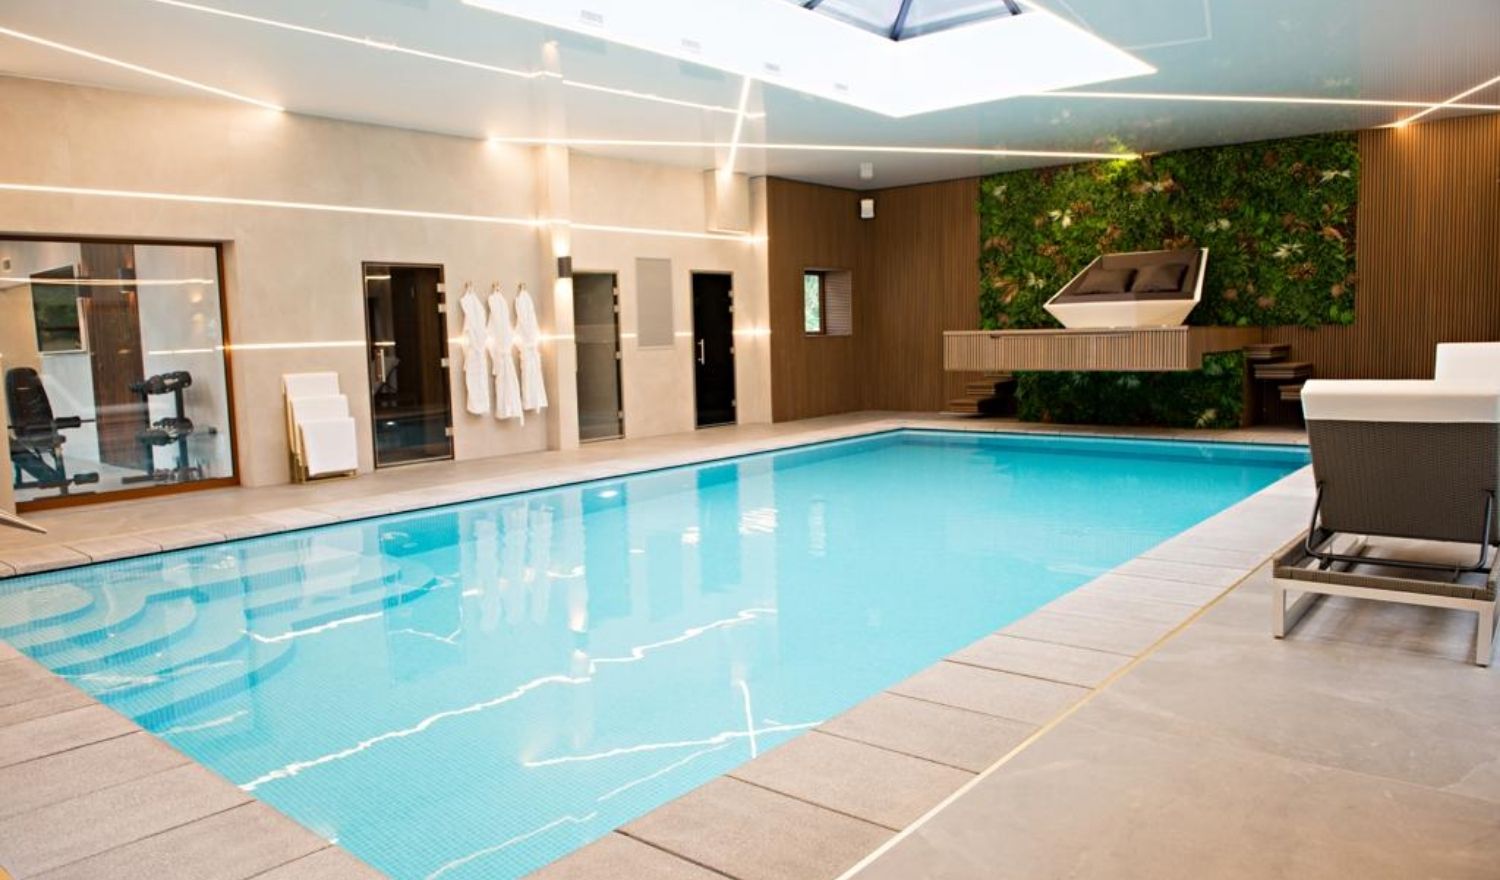 Crystal Leisure - Swimming Pool Maintenance